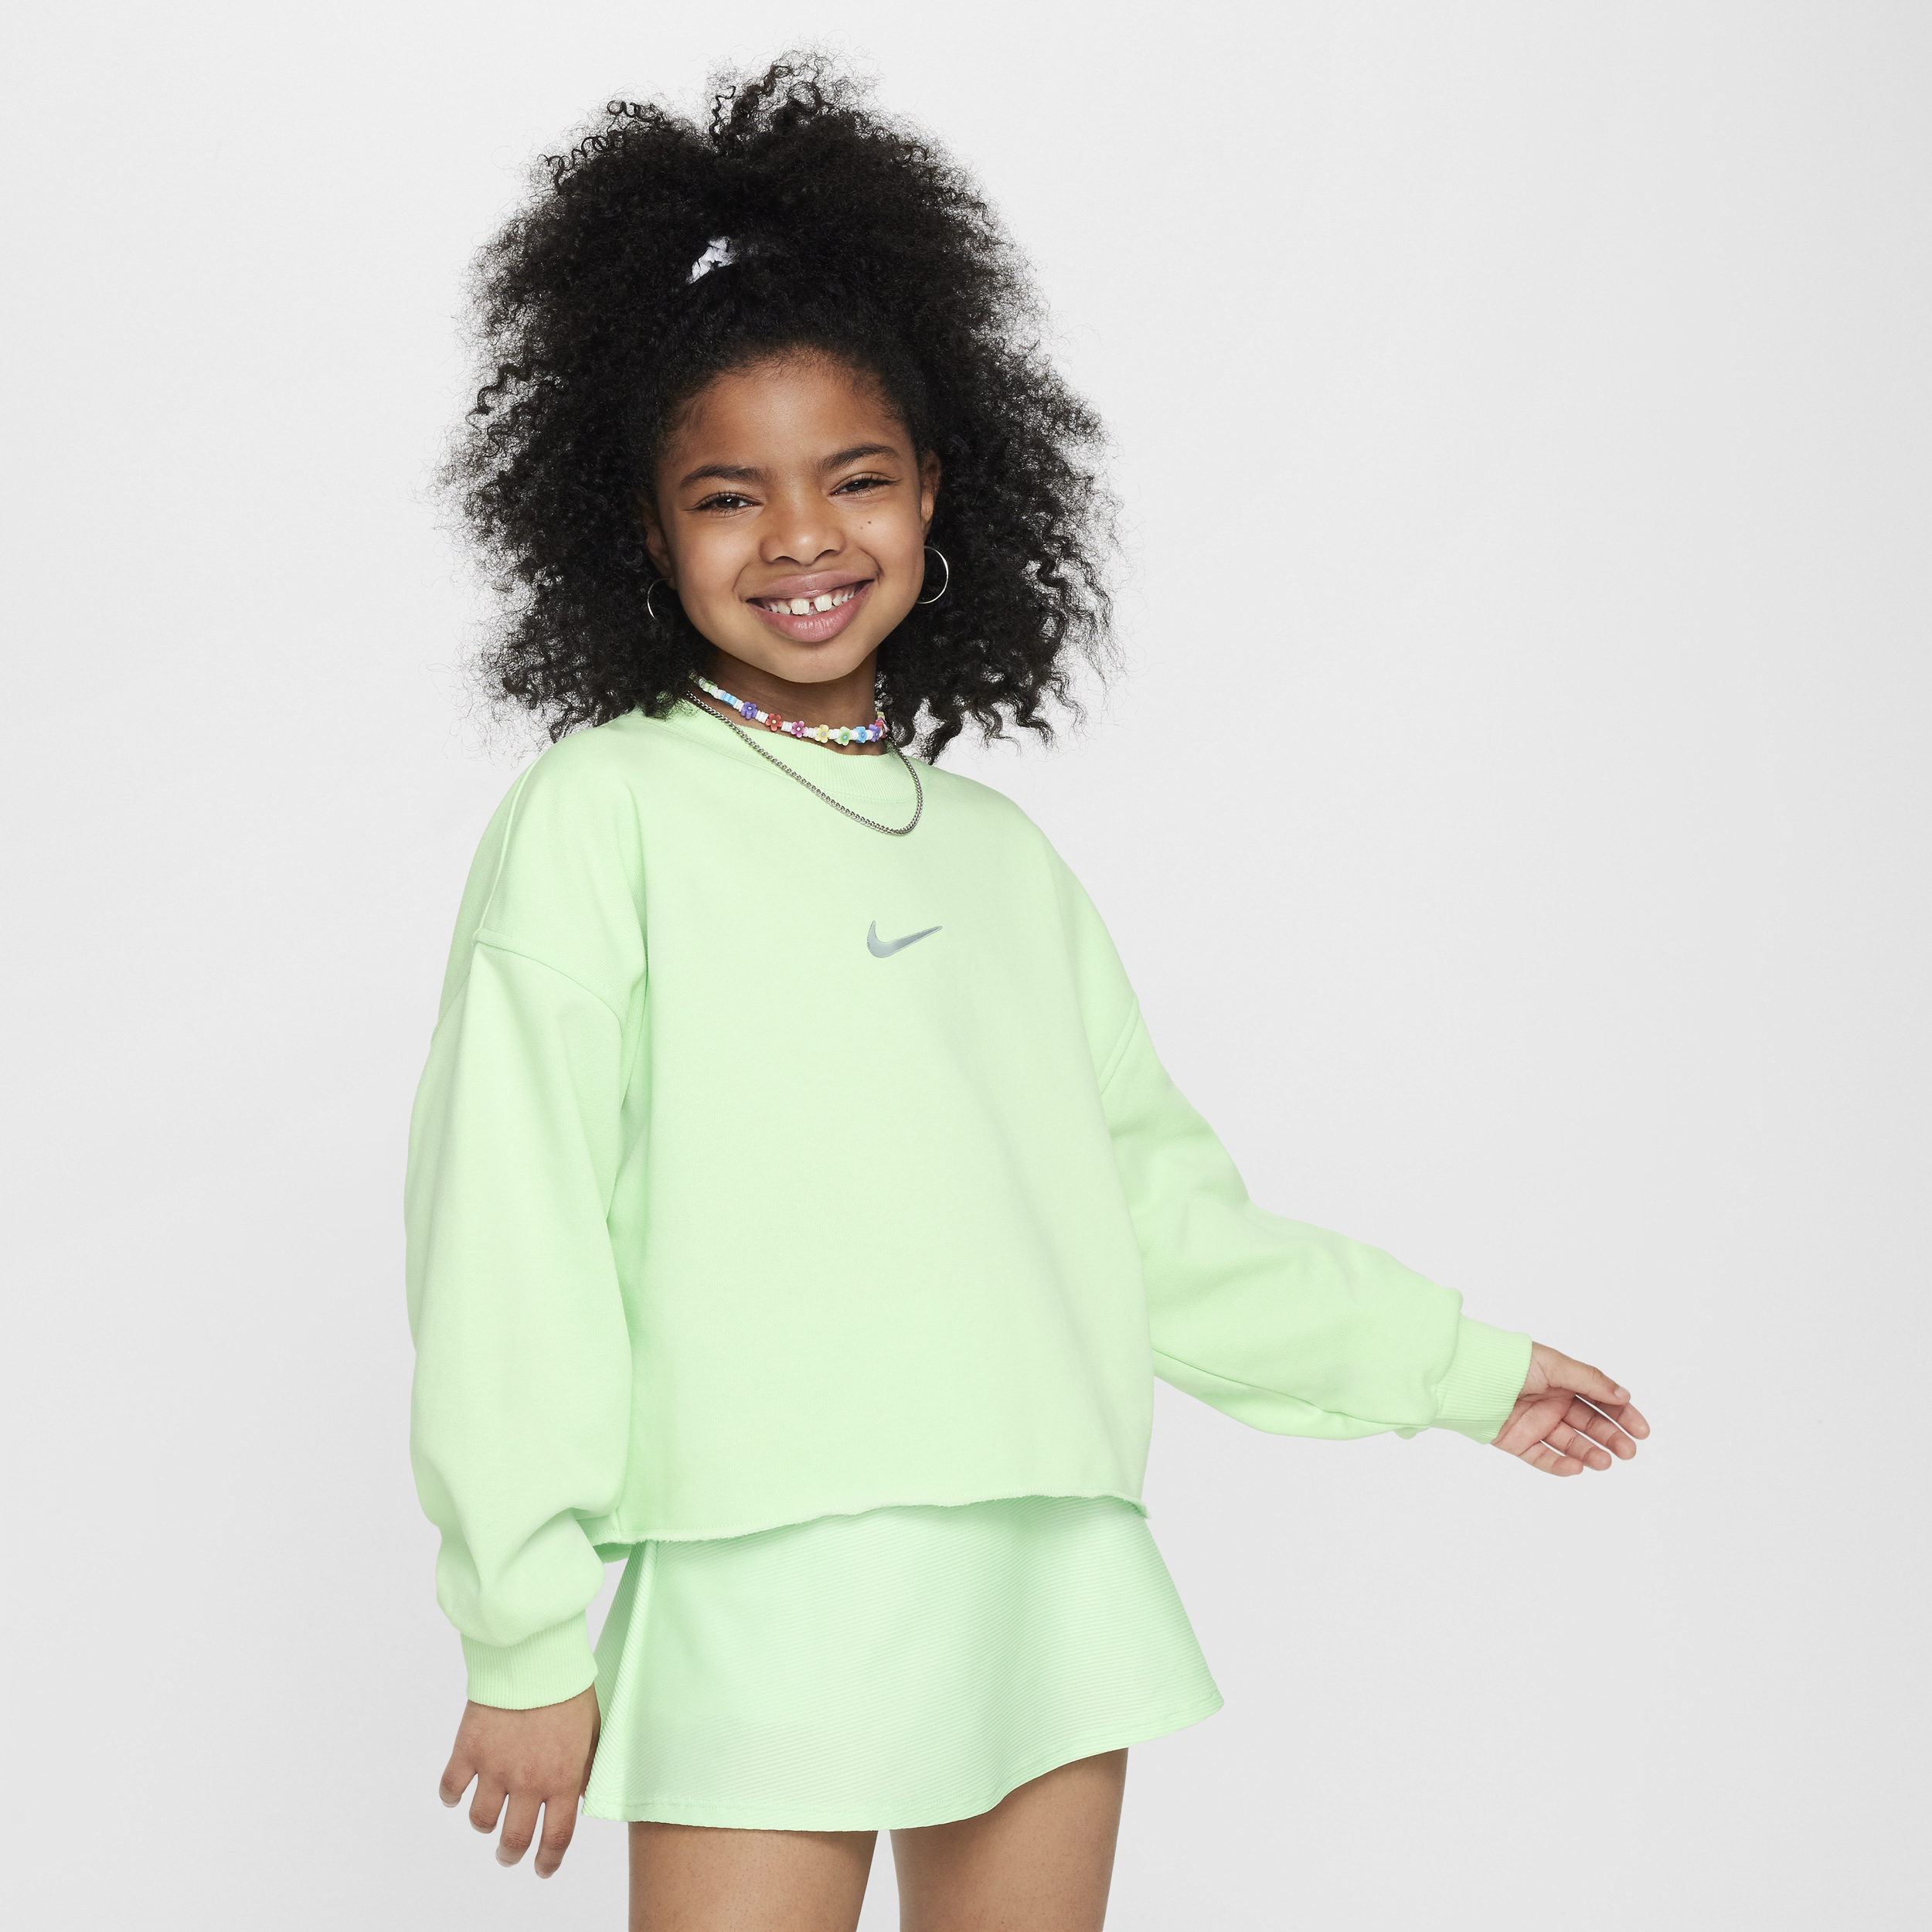 Nike Sportswear Dri-FIT sweatshirt met ronde hals voor meisjes - Groen